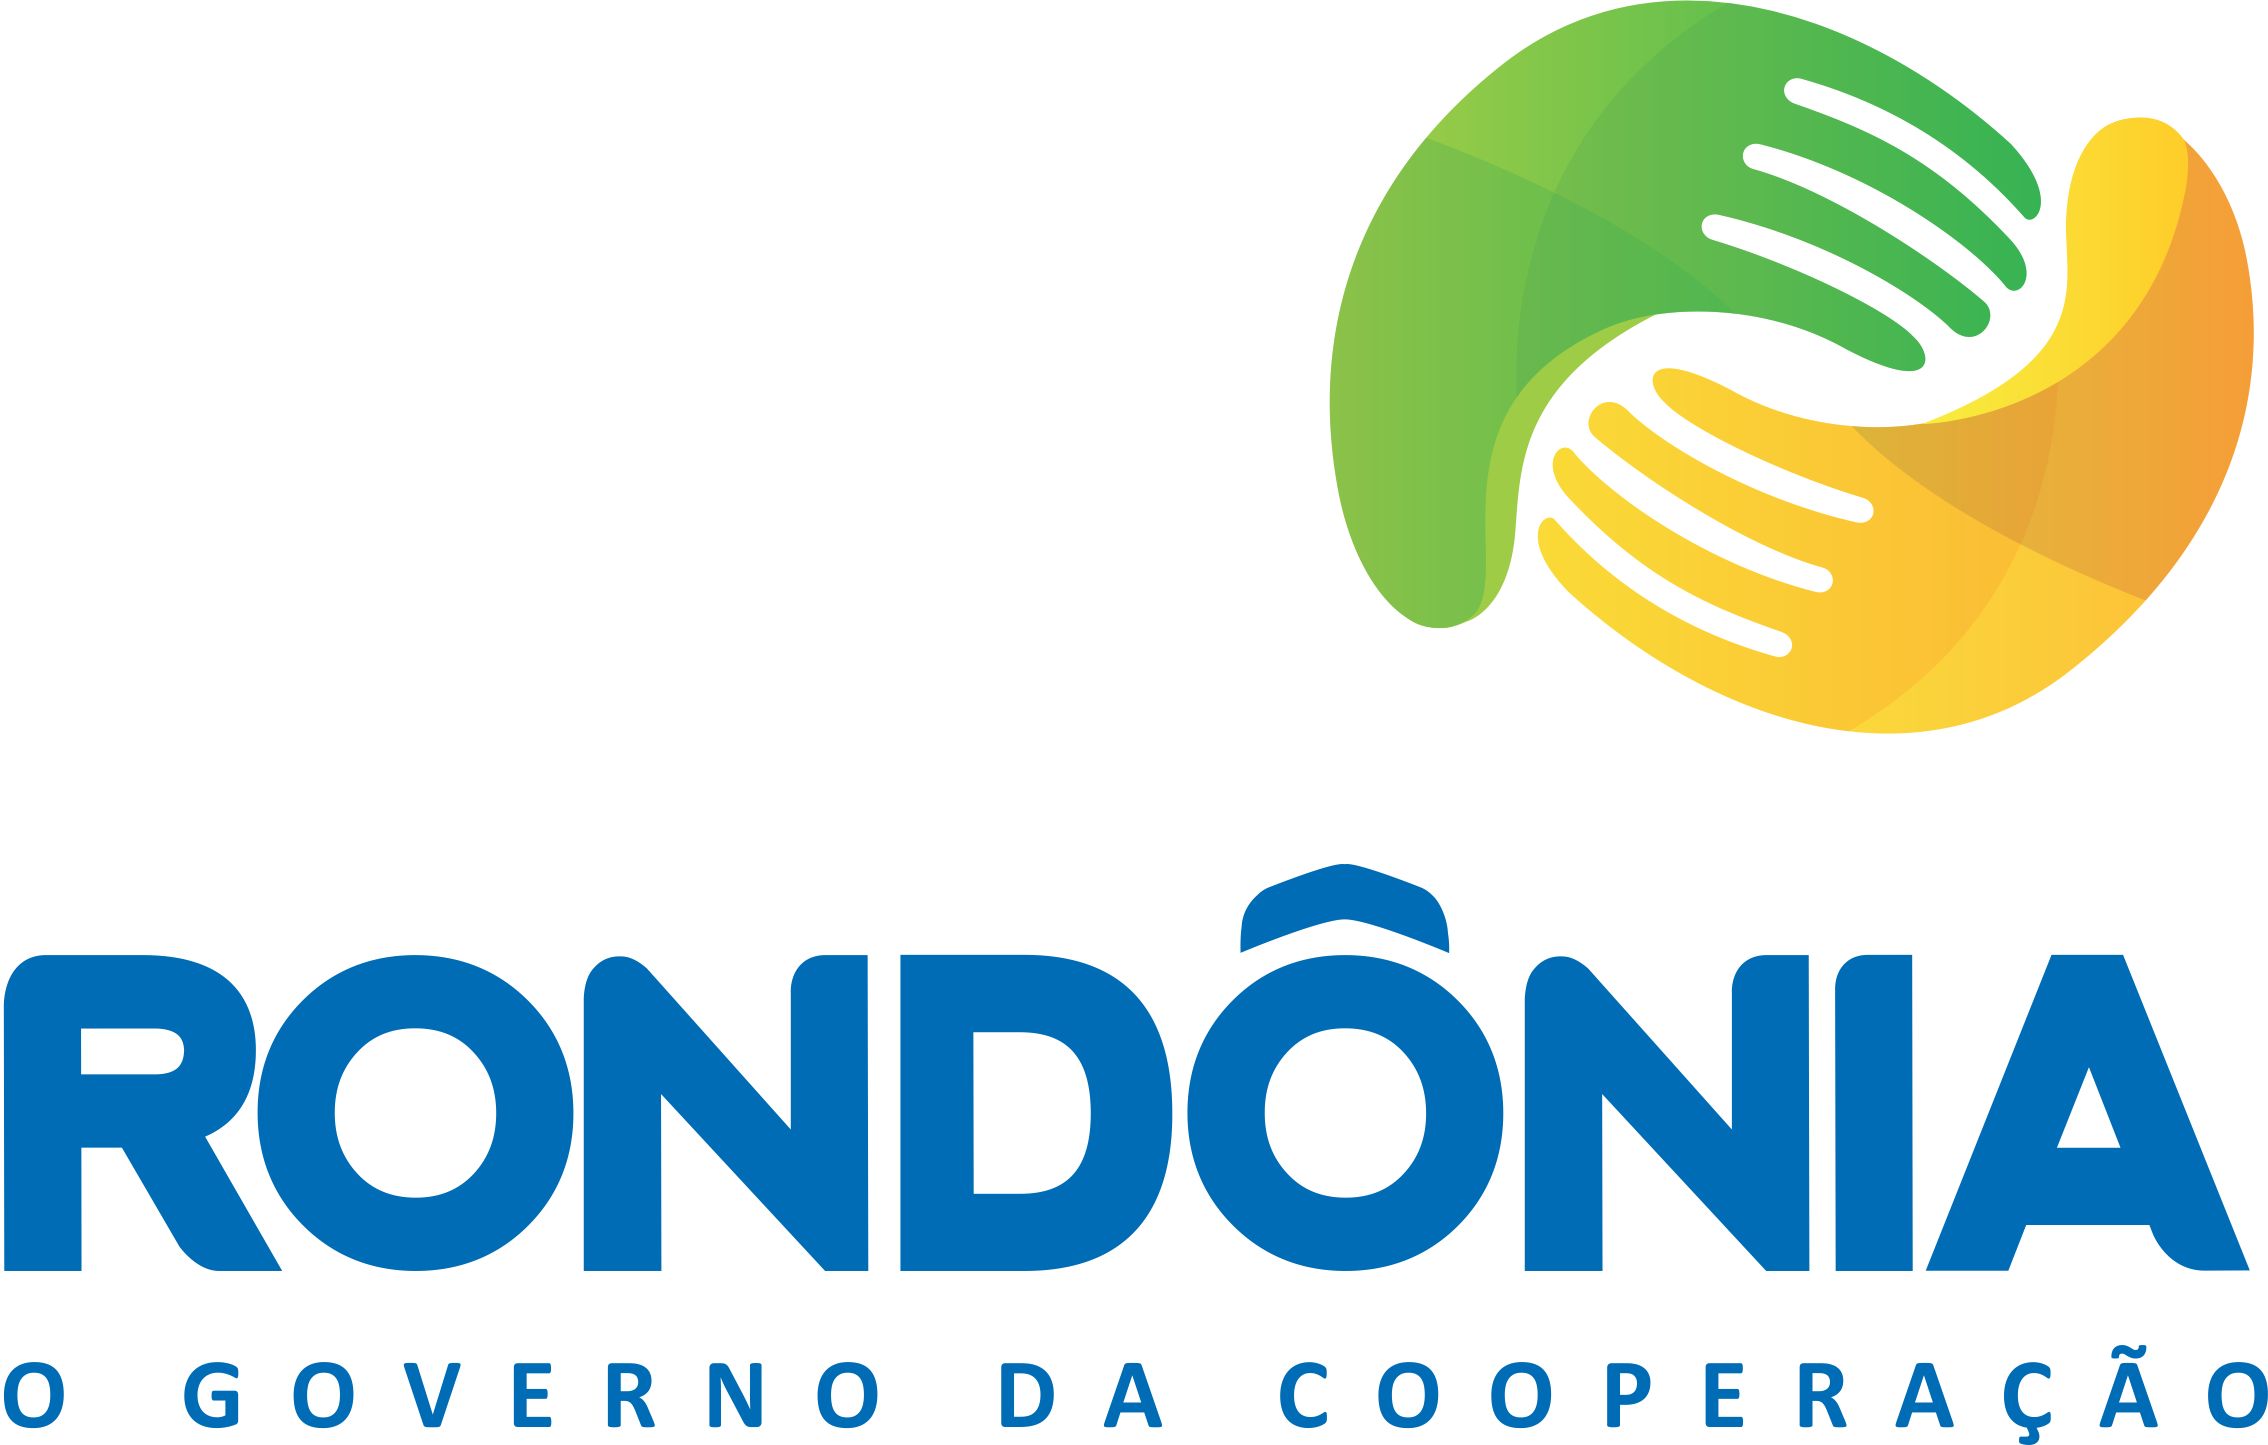 Brasão de Rondônia Logo PNG Vector (CDR) Free Download